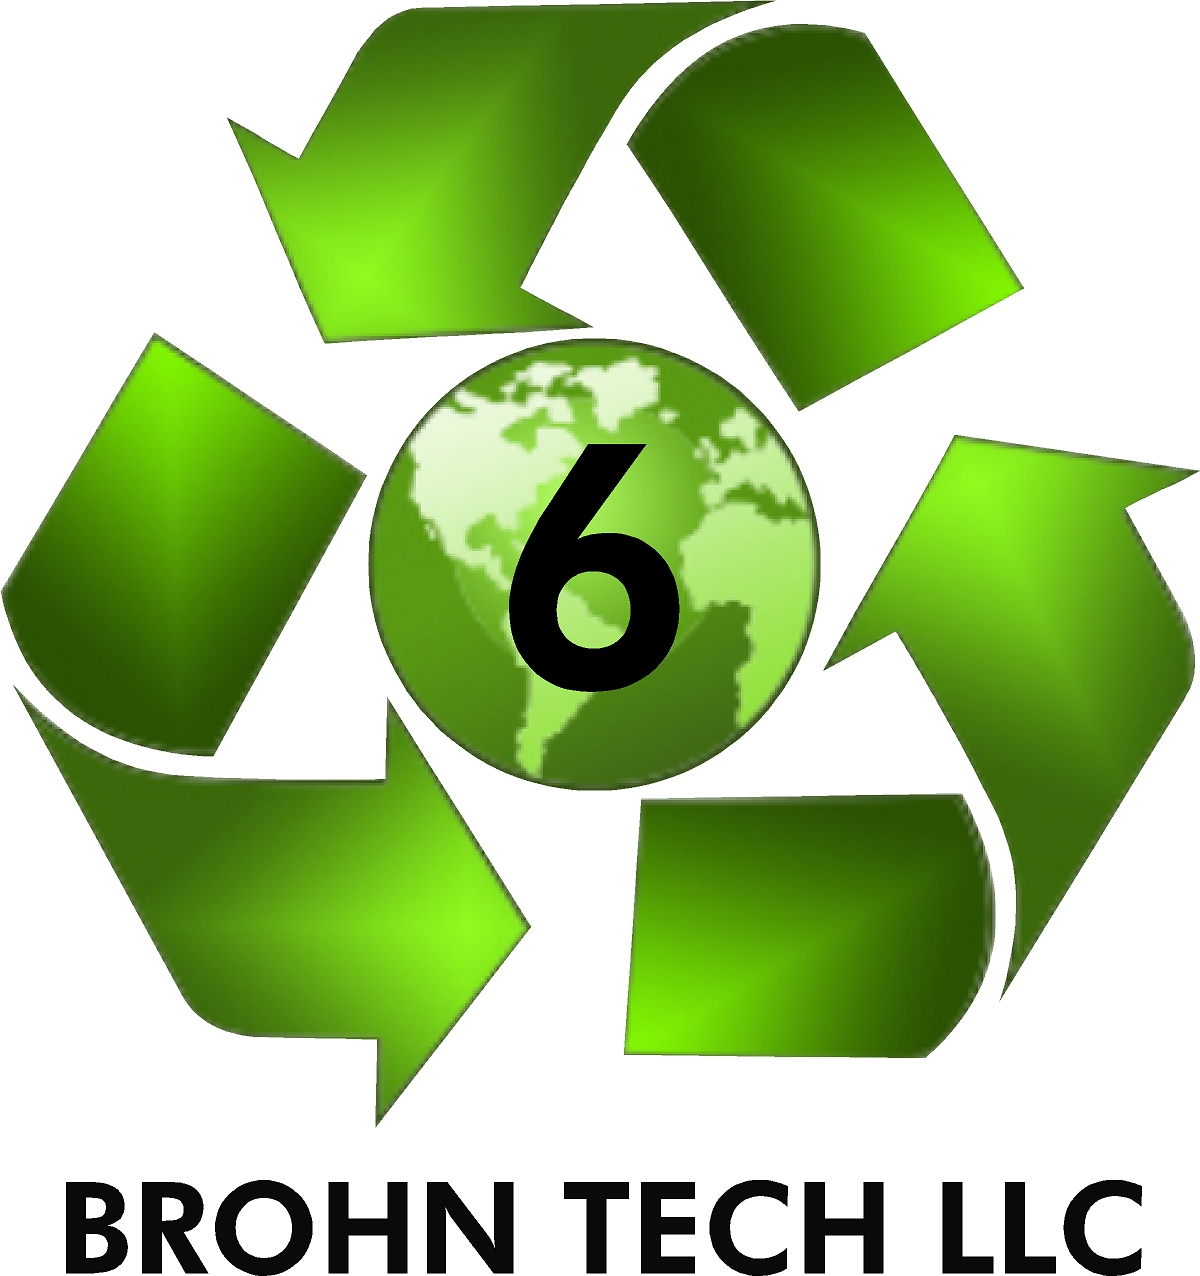 Brohn Tech Mobile 6 logo